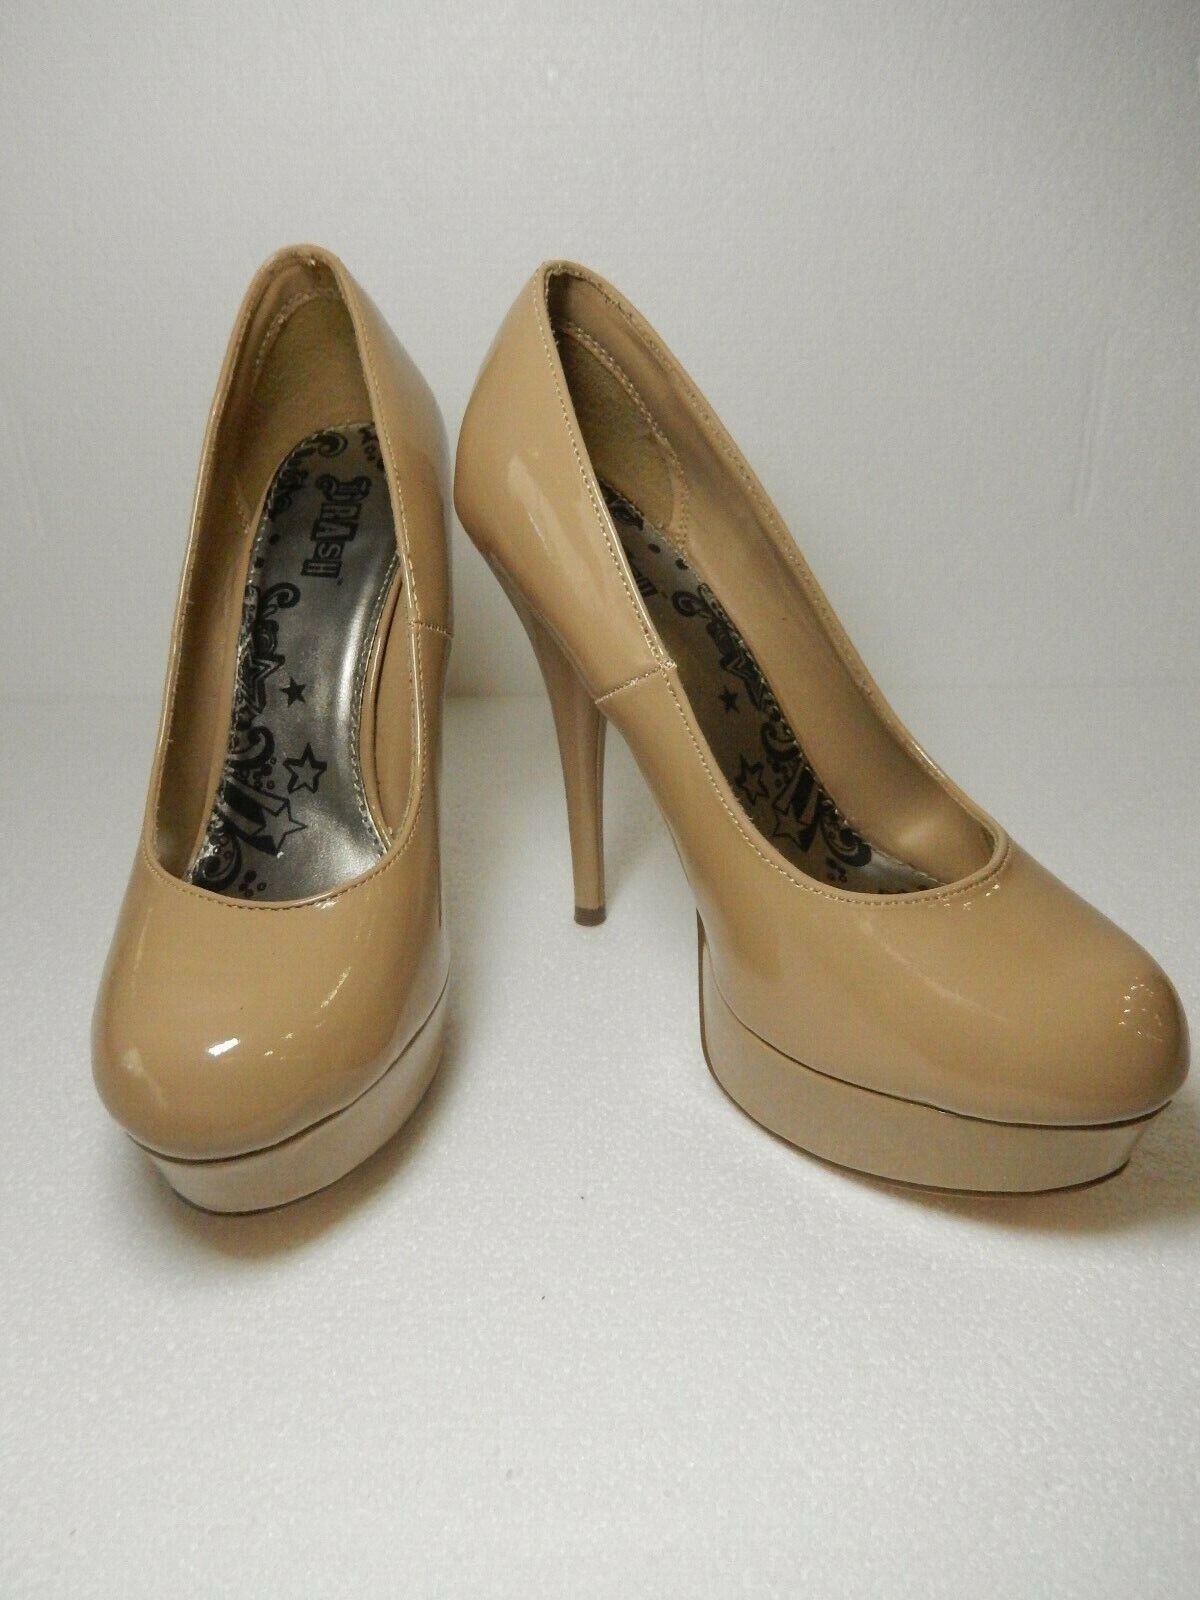 *NEW* Brash Heels Patent Leather Platform  Size 7 with 5-1/4" Stiletto Heels